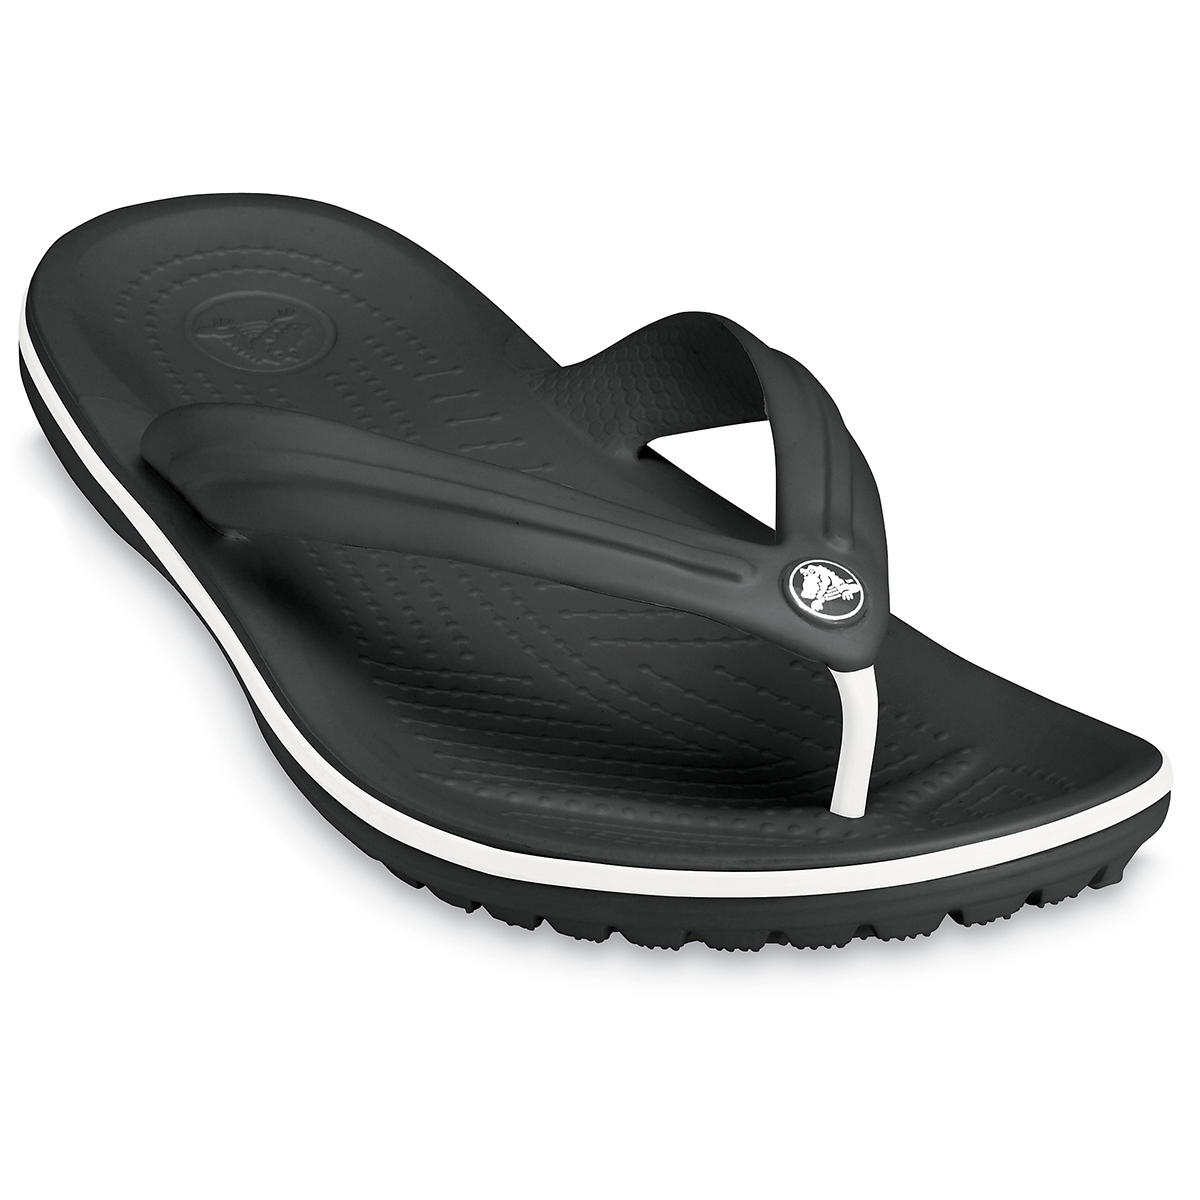 Crocs Crocband Flip Unisex Sandale Zehentrenner Badelatsche 11033 schwarz